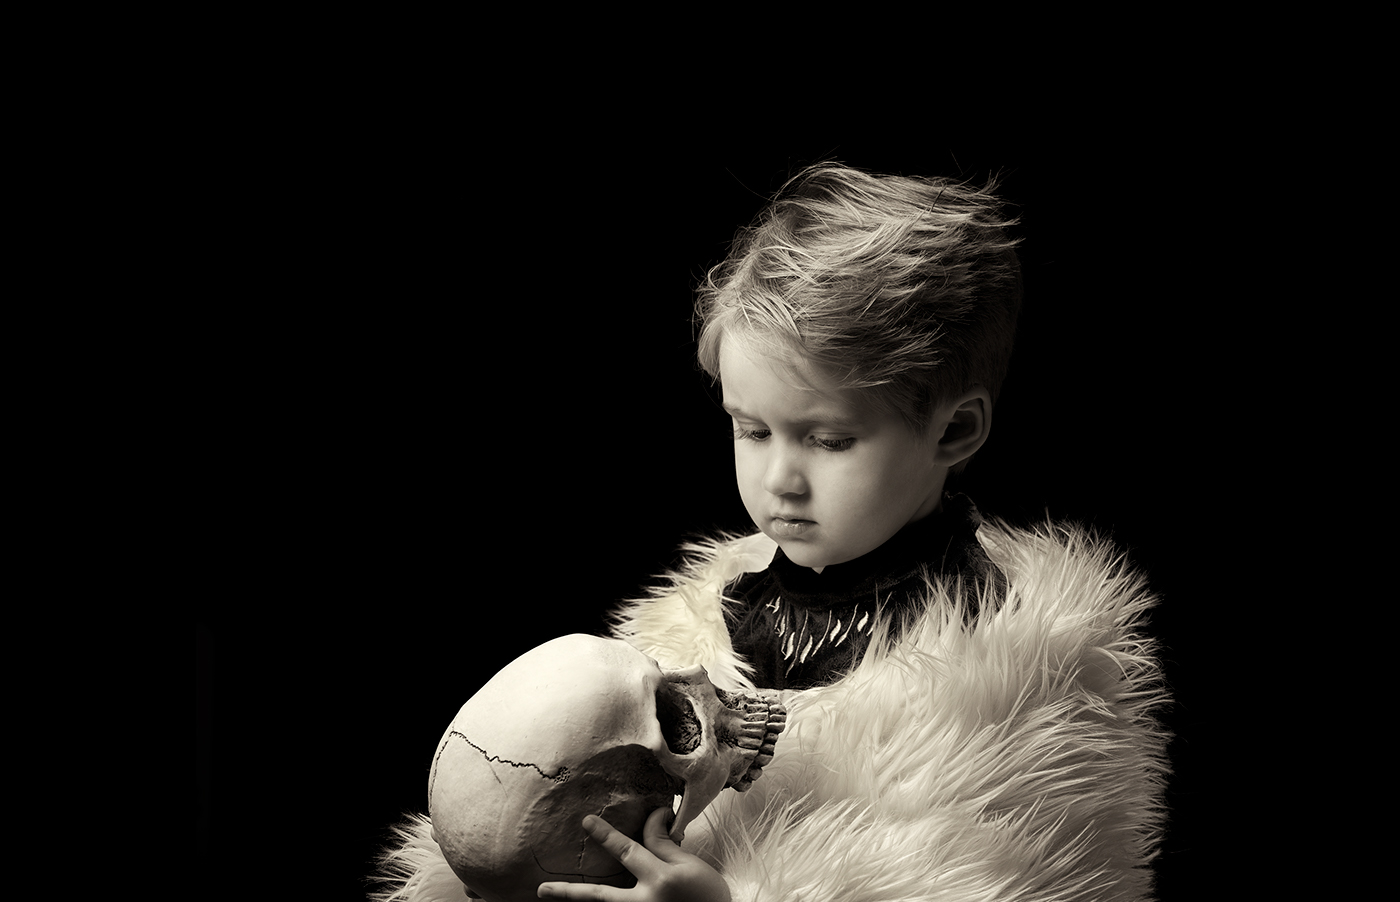 Princess skull Portraiture black and white